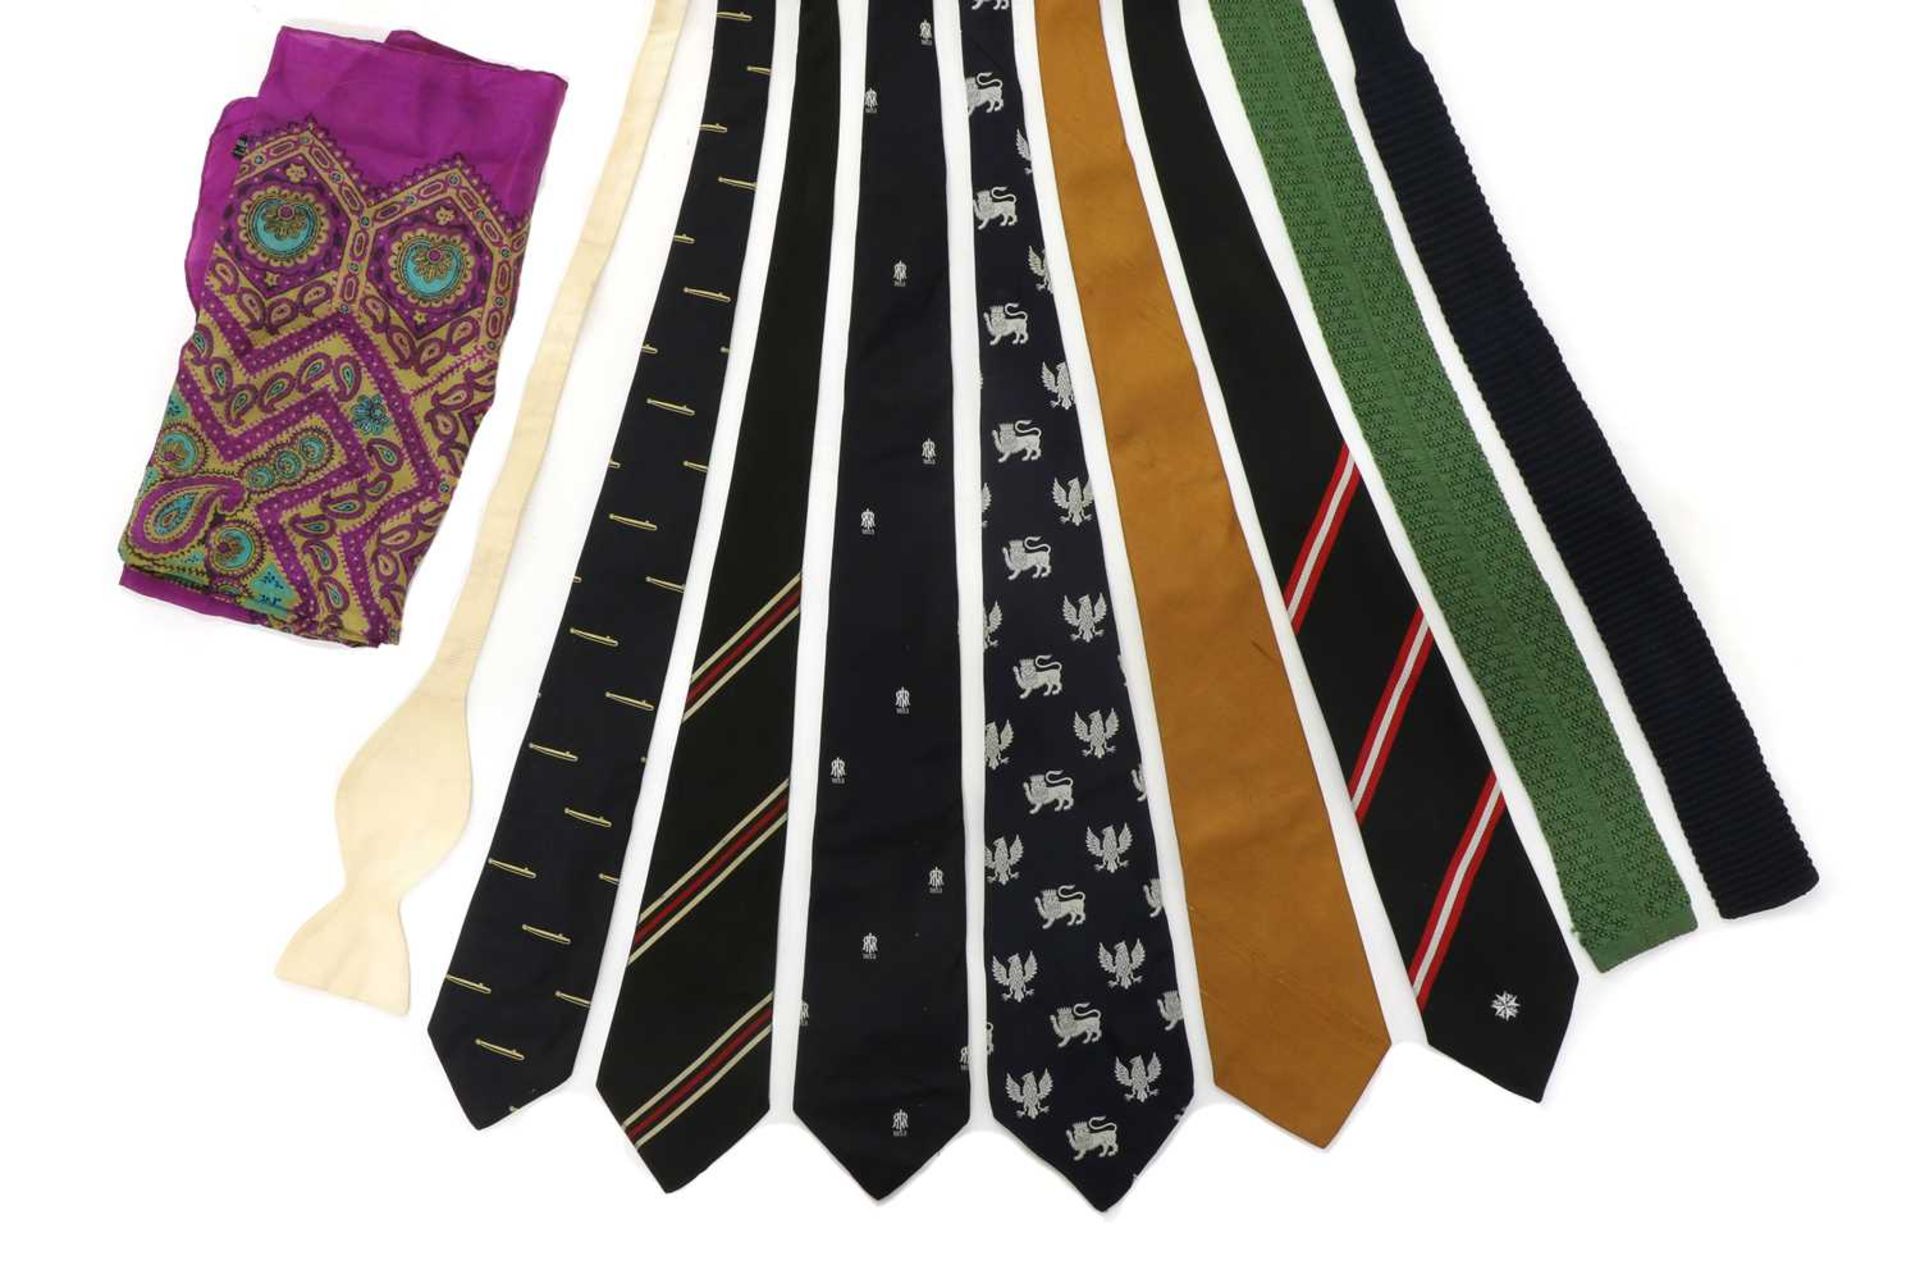 Eight ties,